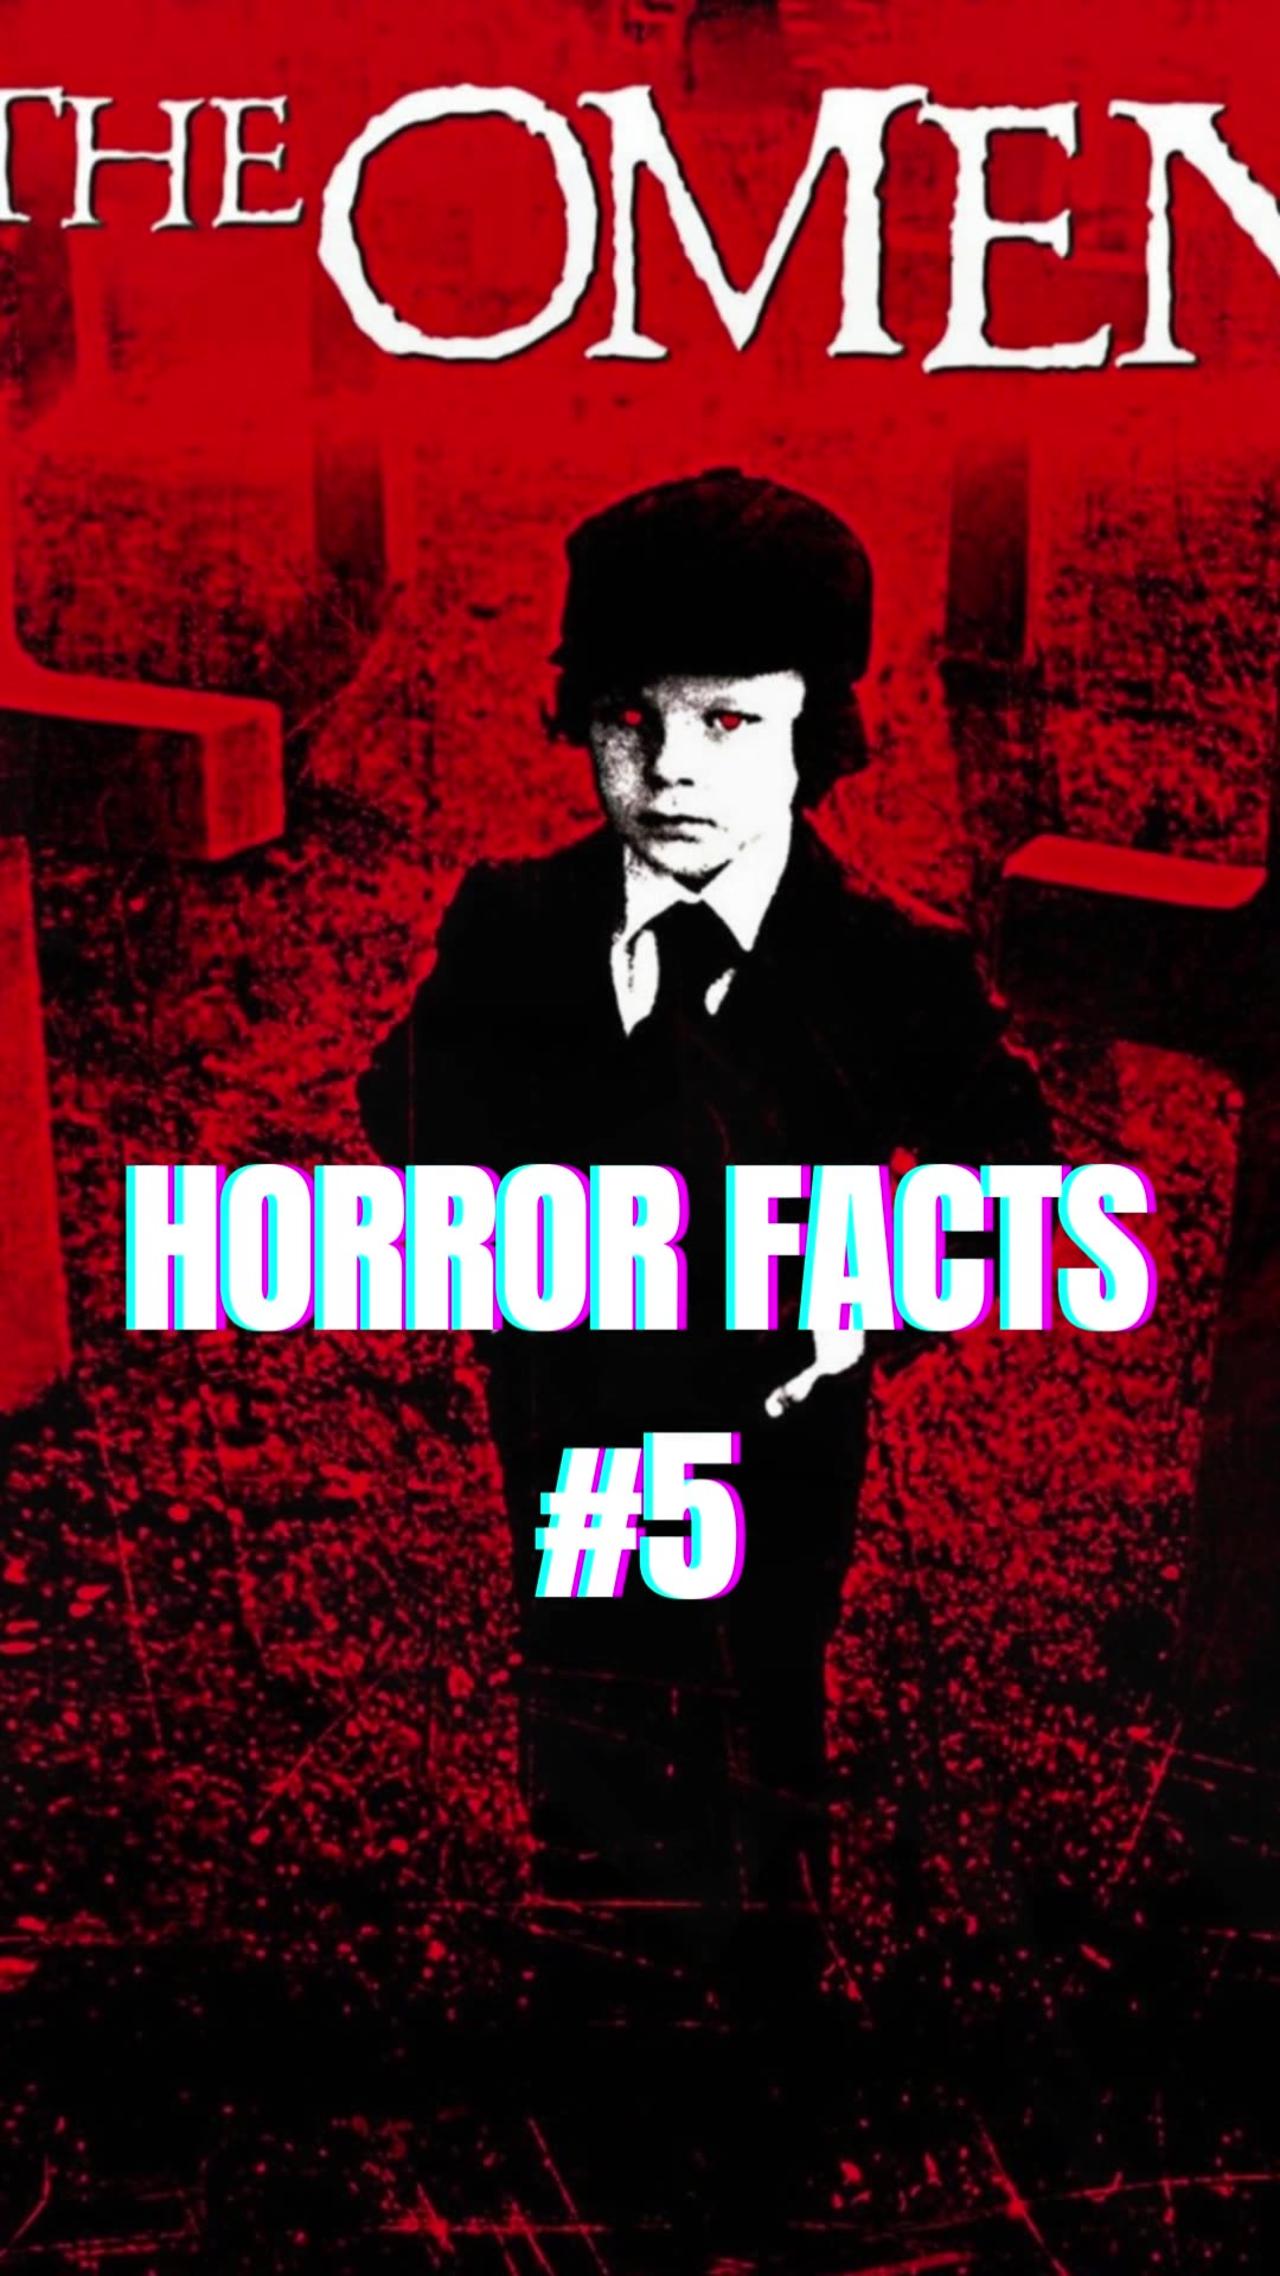 Horror Fact 5